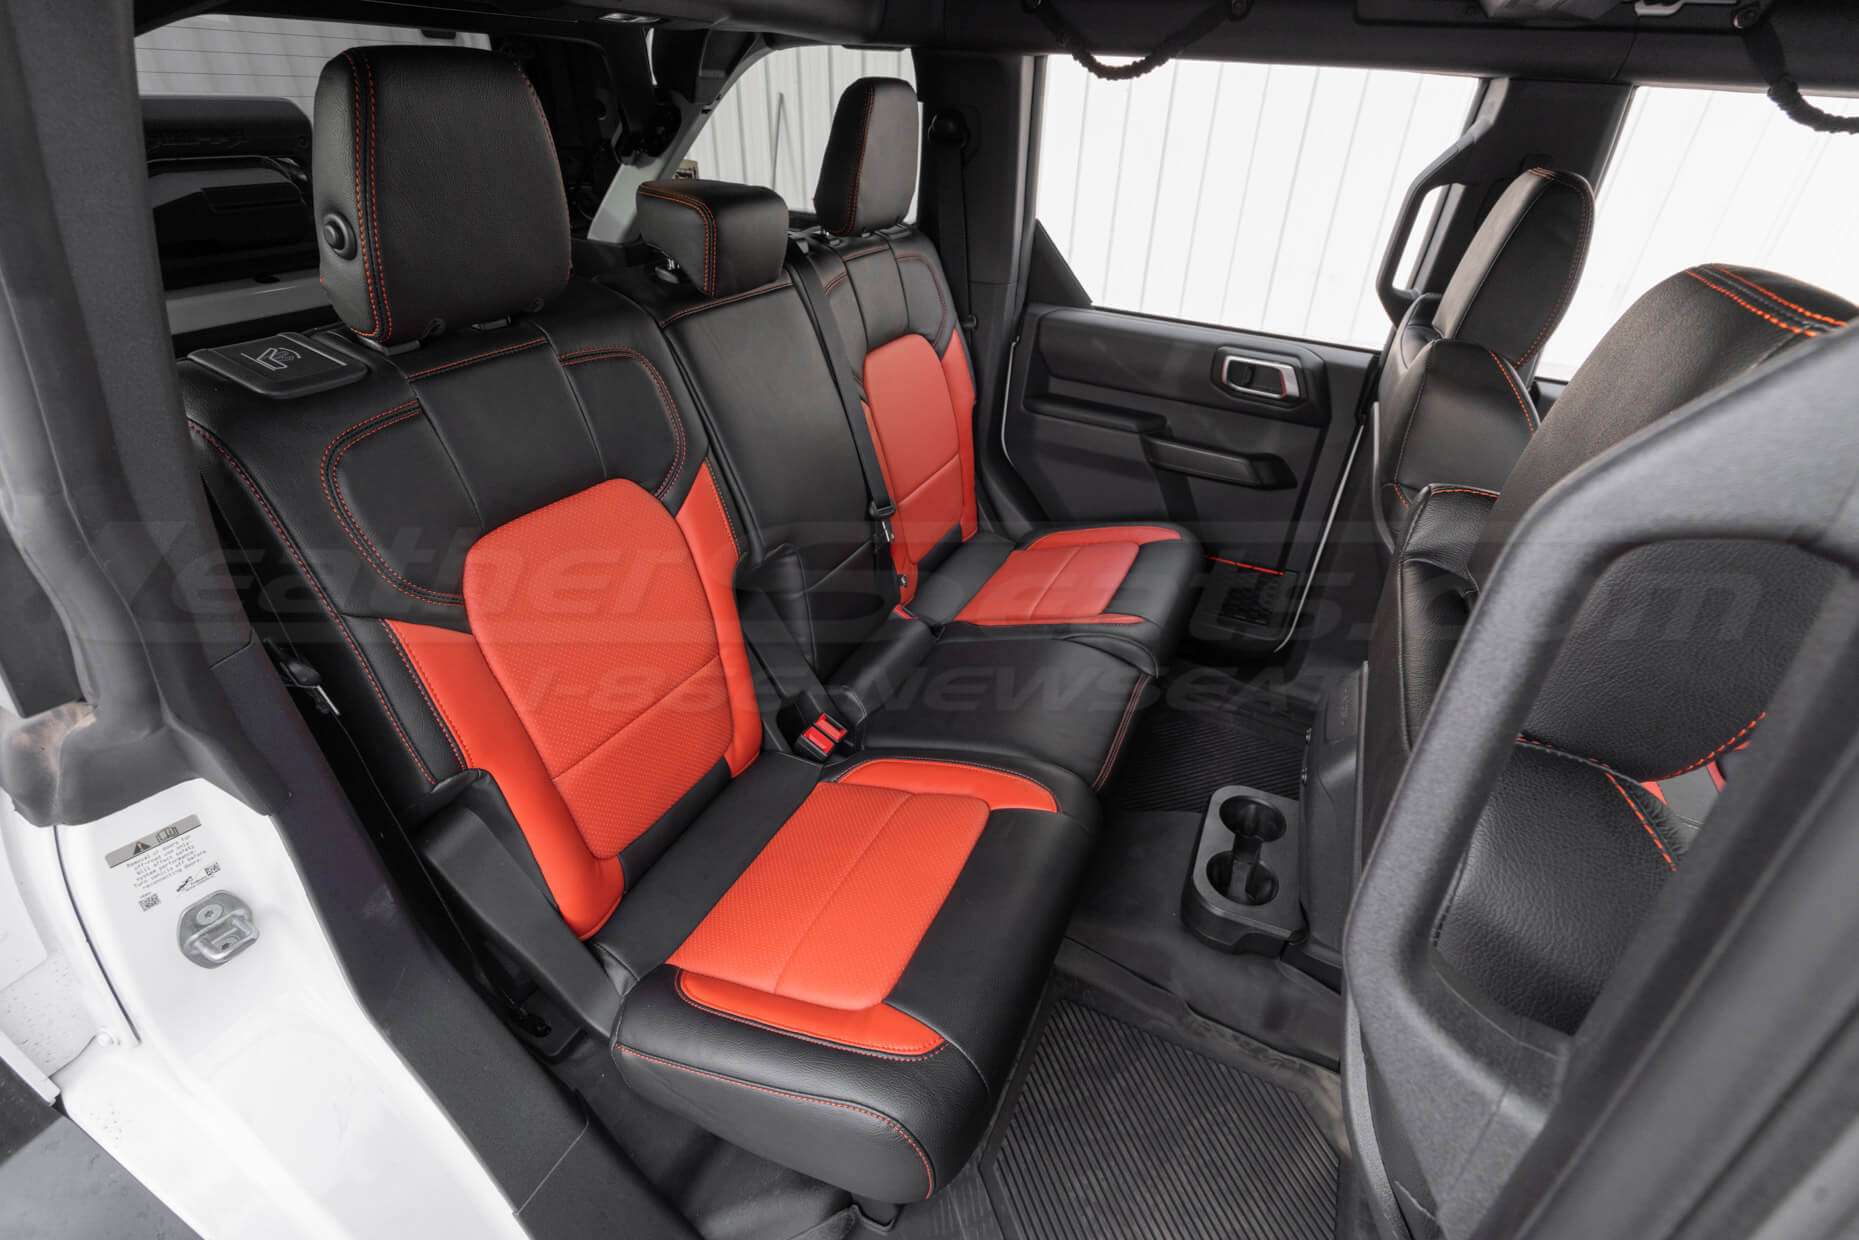 Forb Bronco Raptor with custom Black ad Tangerine leather seats - Rear seats passenger side